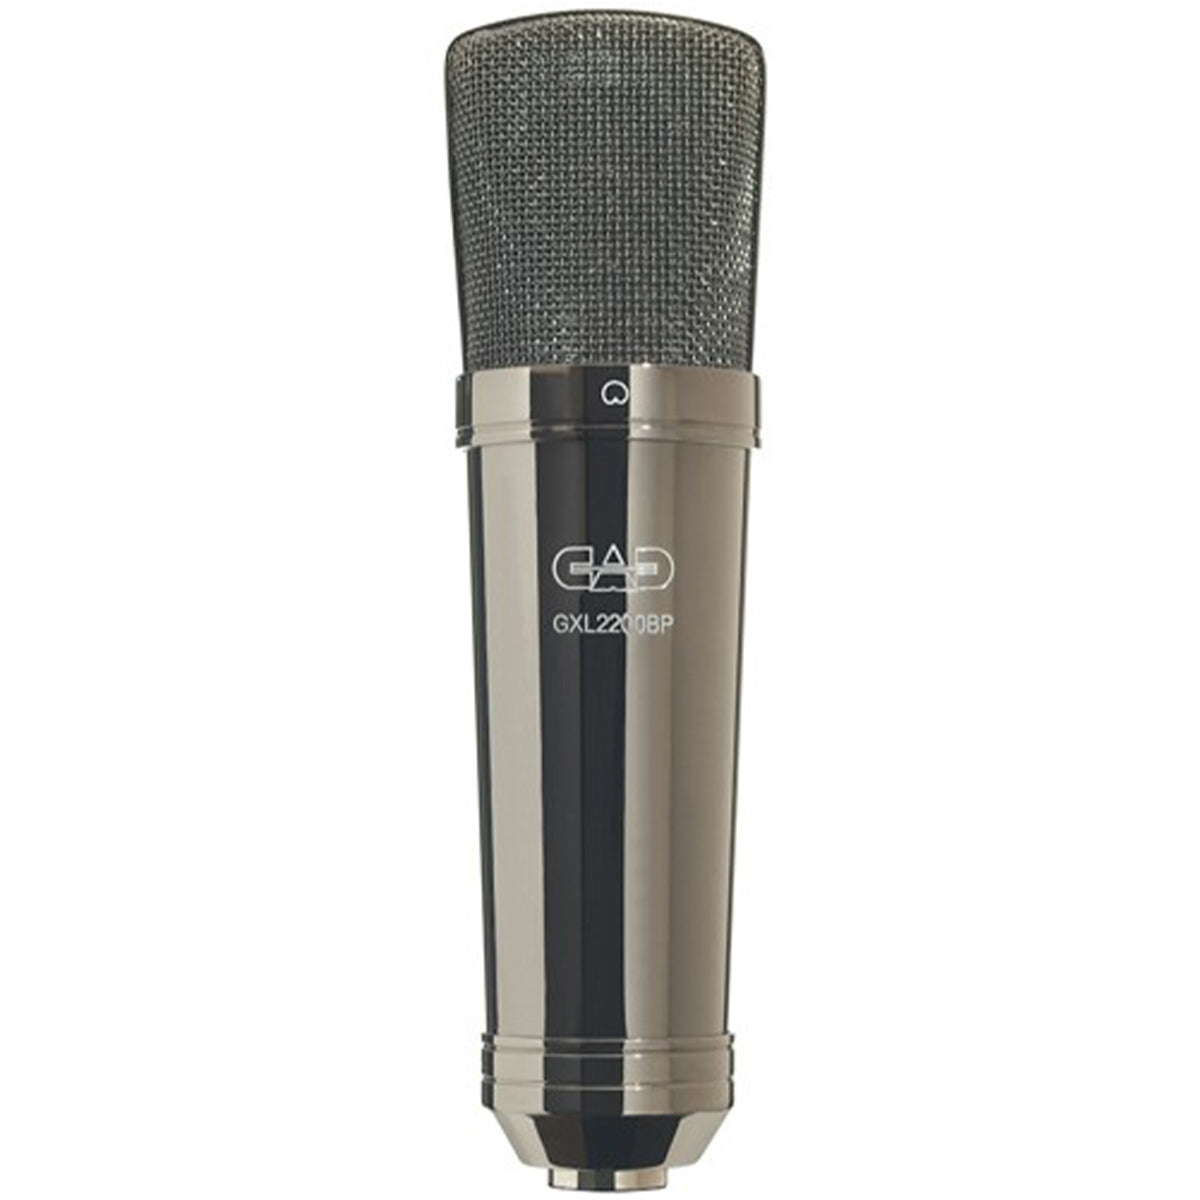 CAD GXL2200BP Condenser Microphone